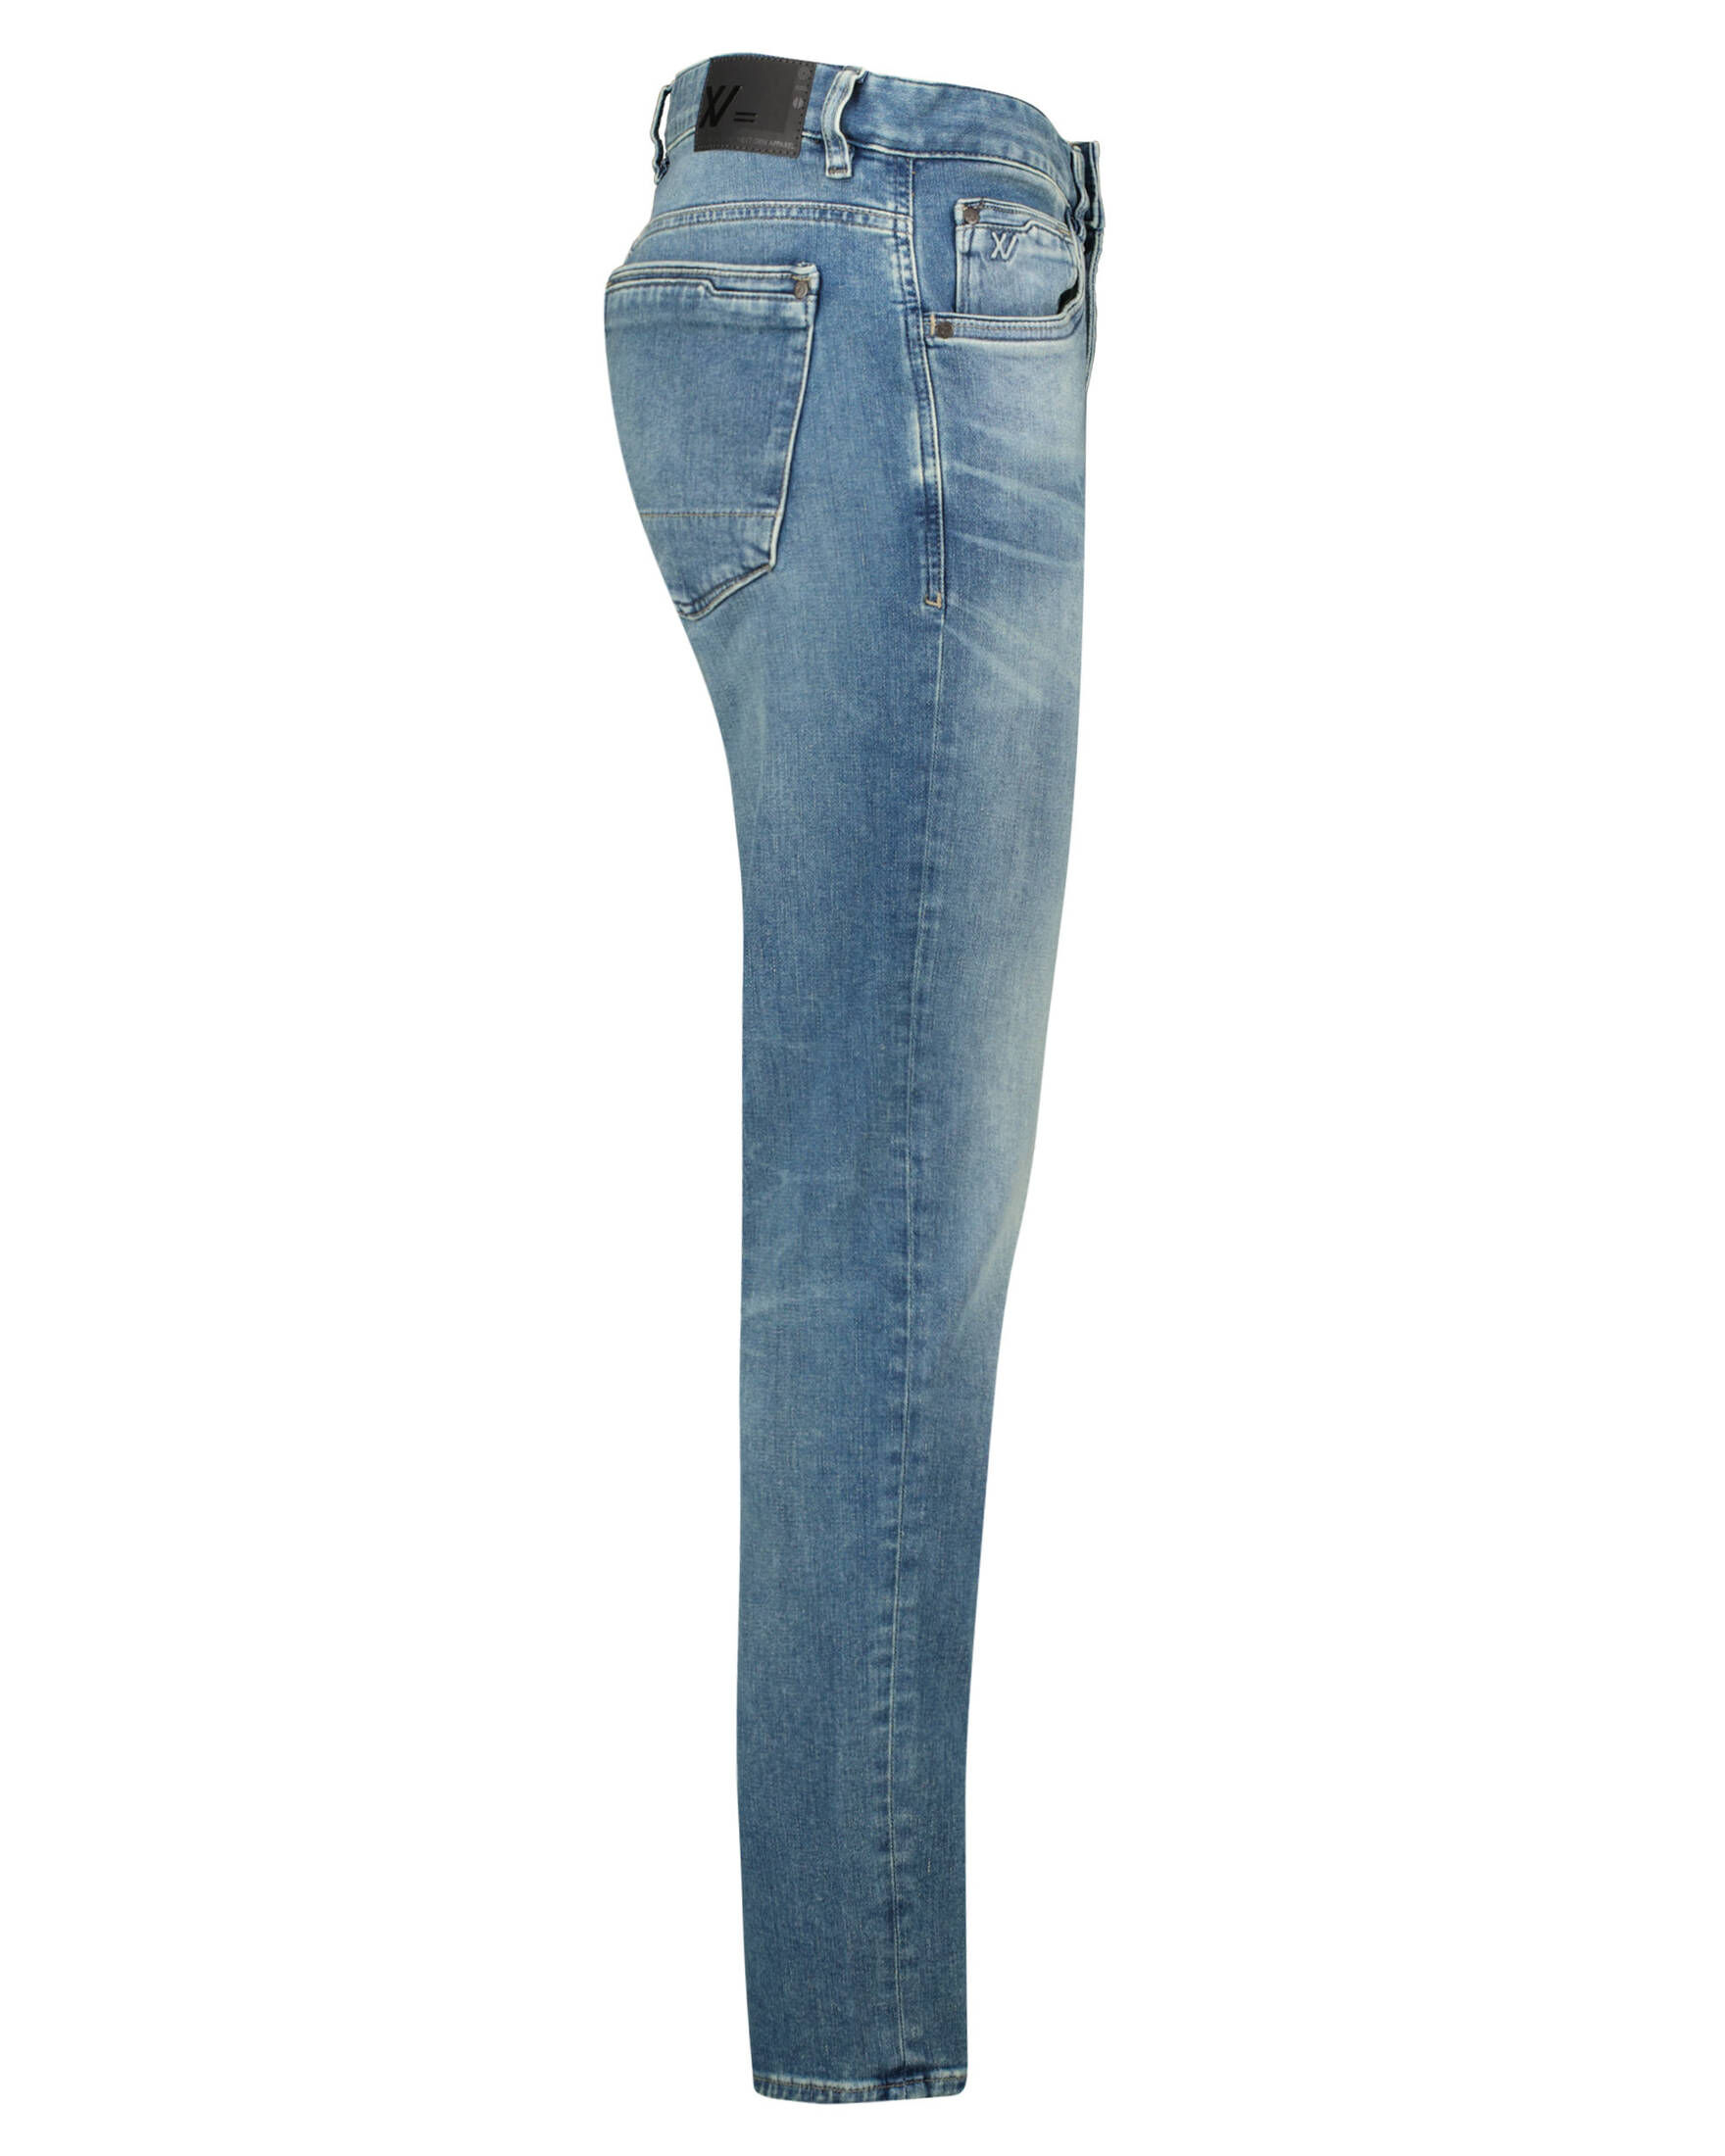 PME Legend Herren Jeans XV SKY DIRT WASH Slim Fit kaufen | engelhorn